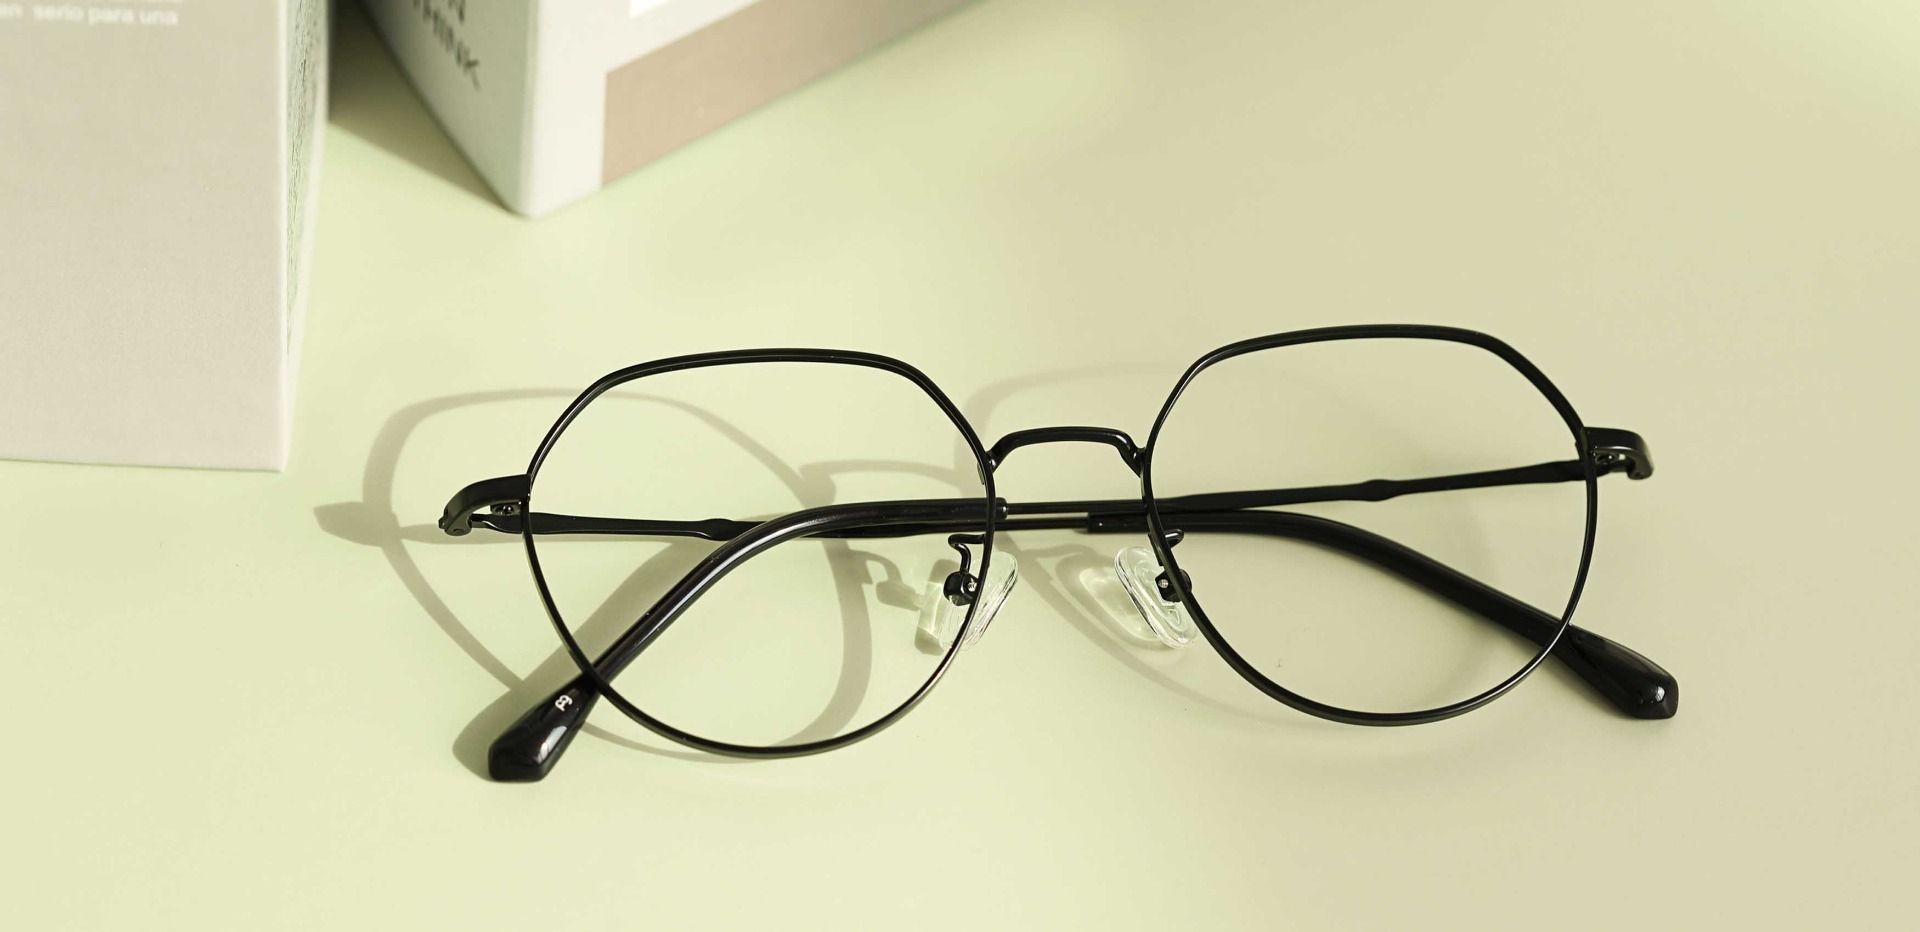 Langdon Geometric Prescription Glasses - Black